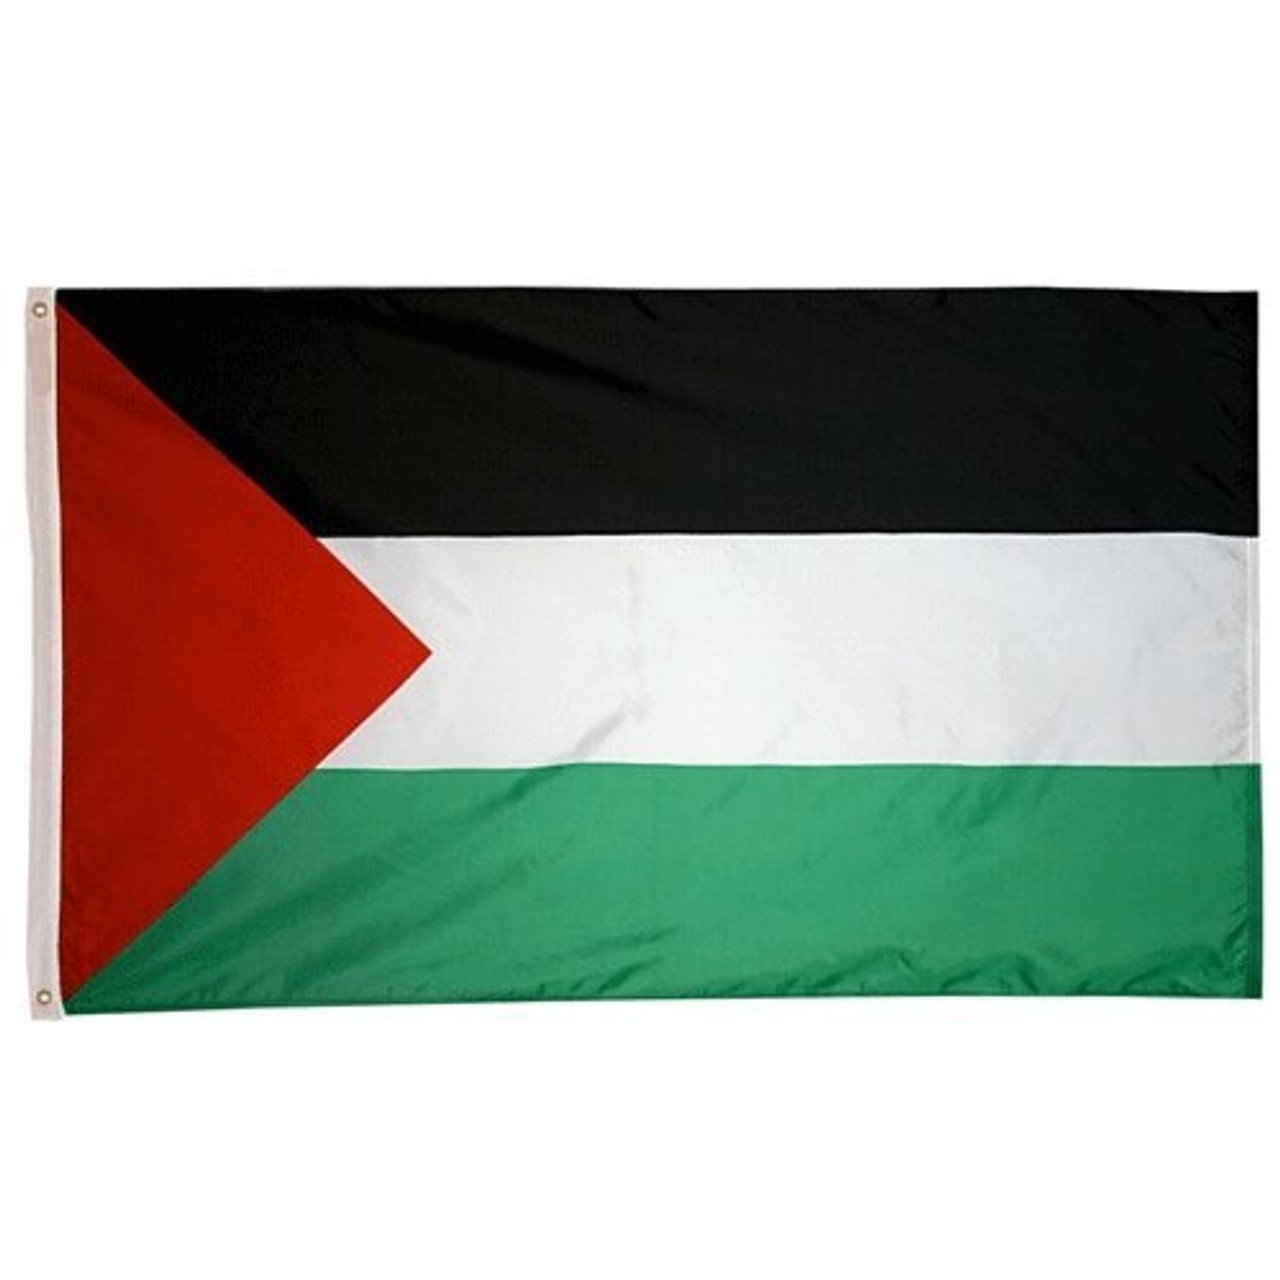 Palestine flag.jpg